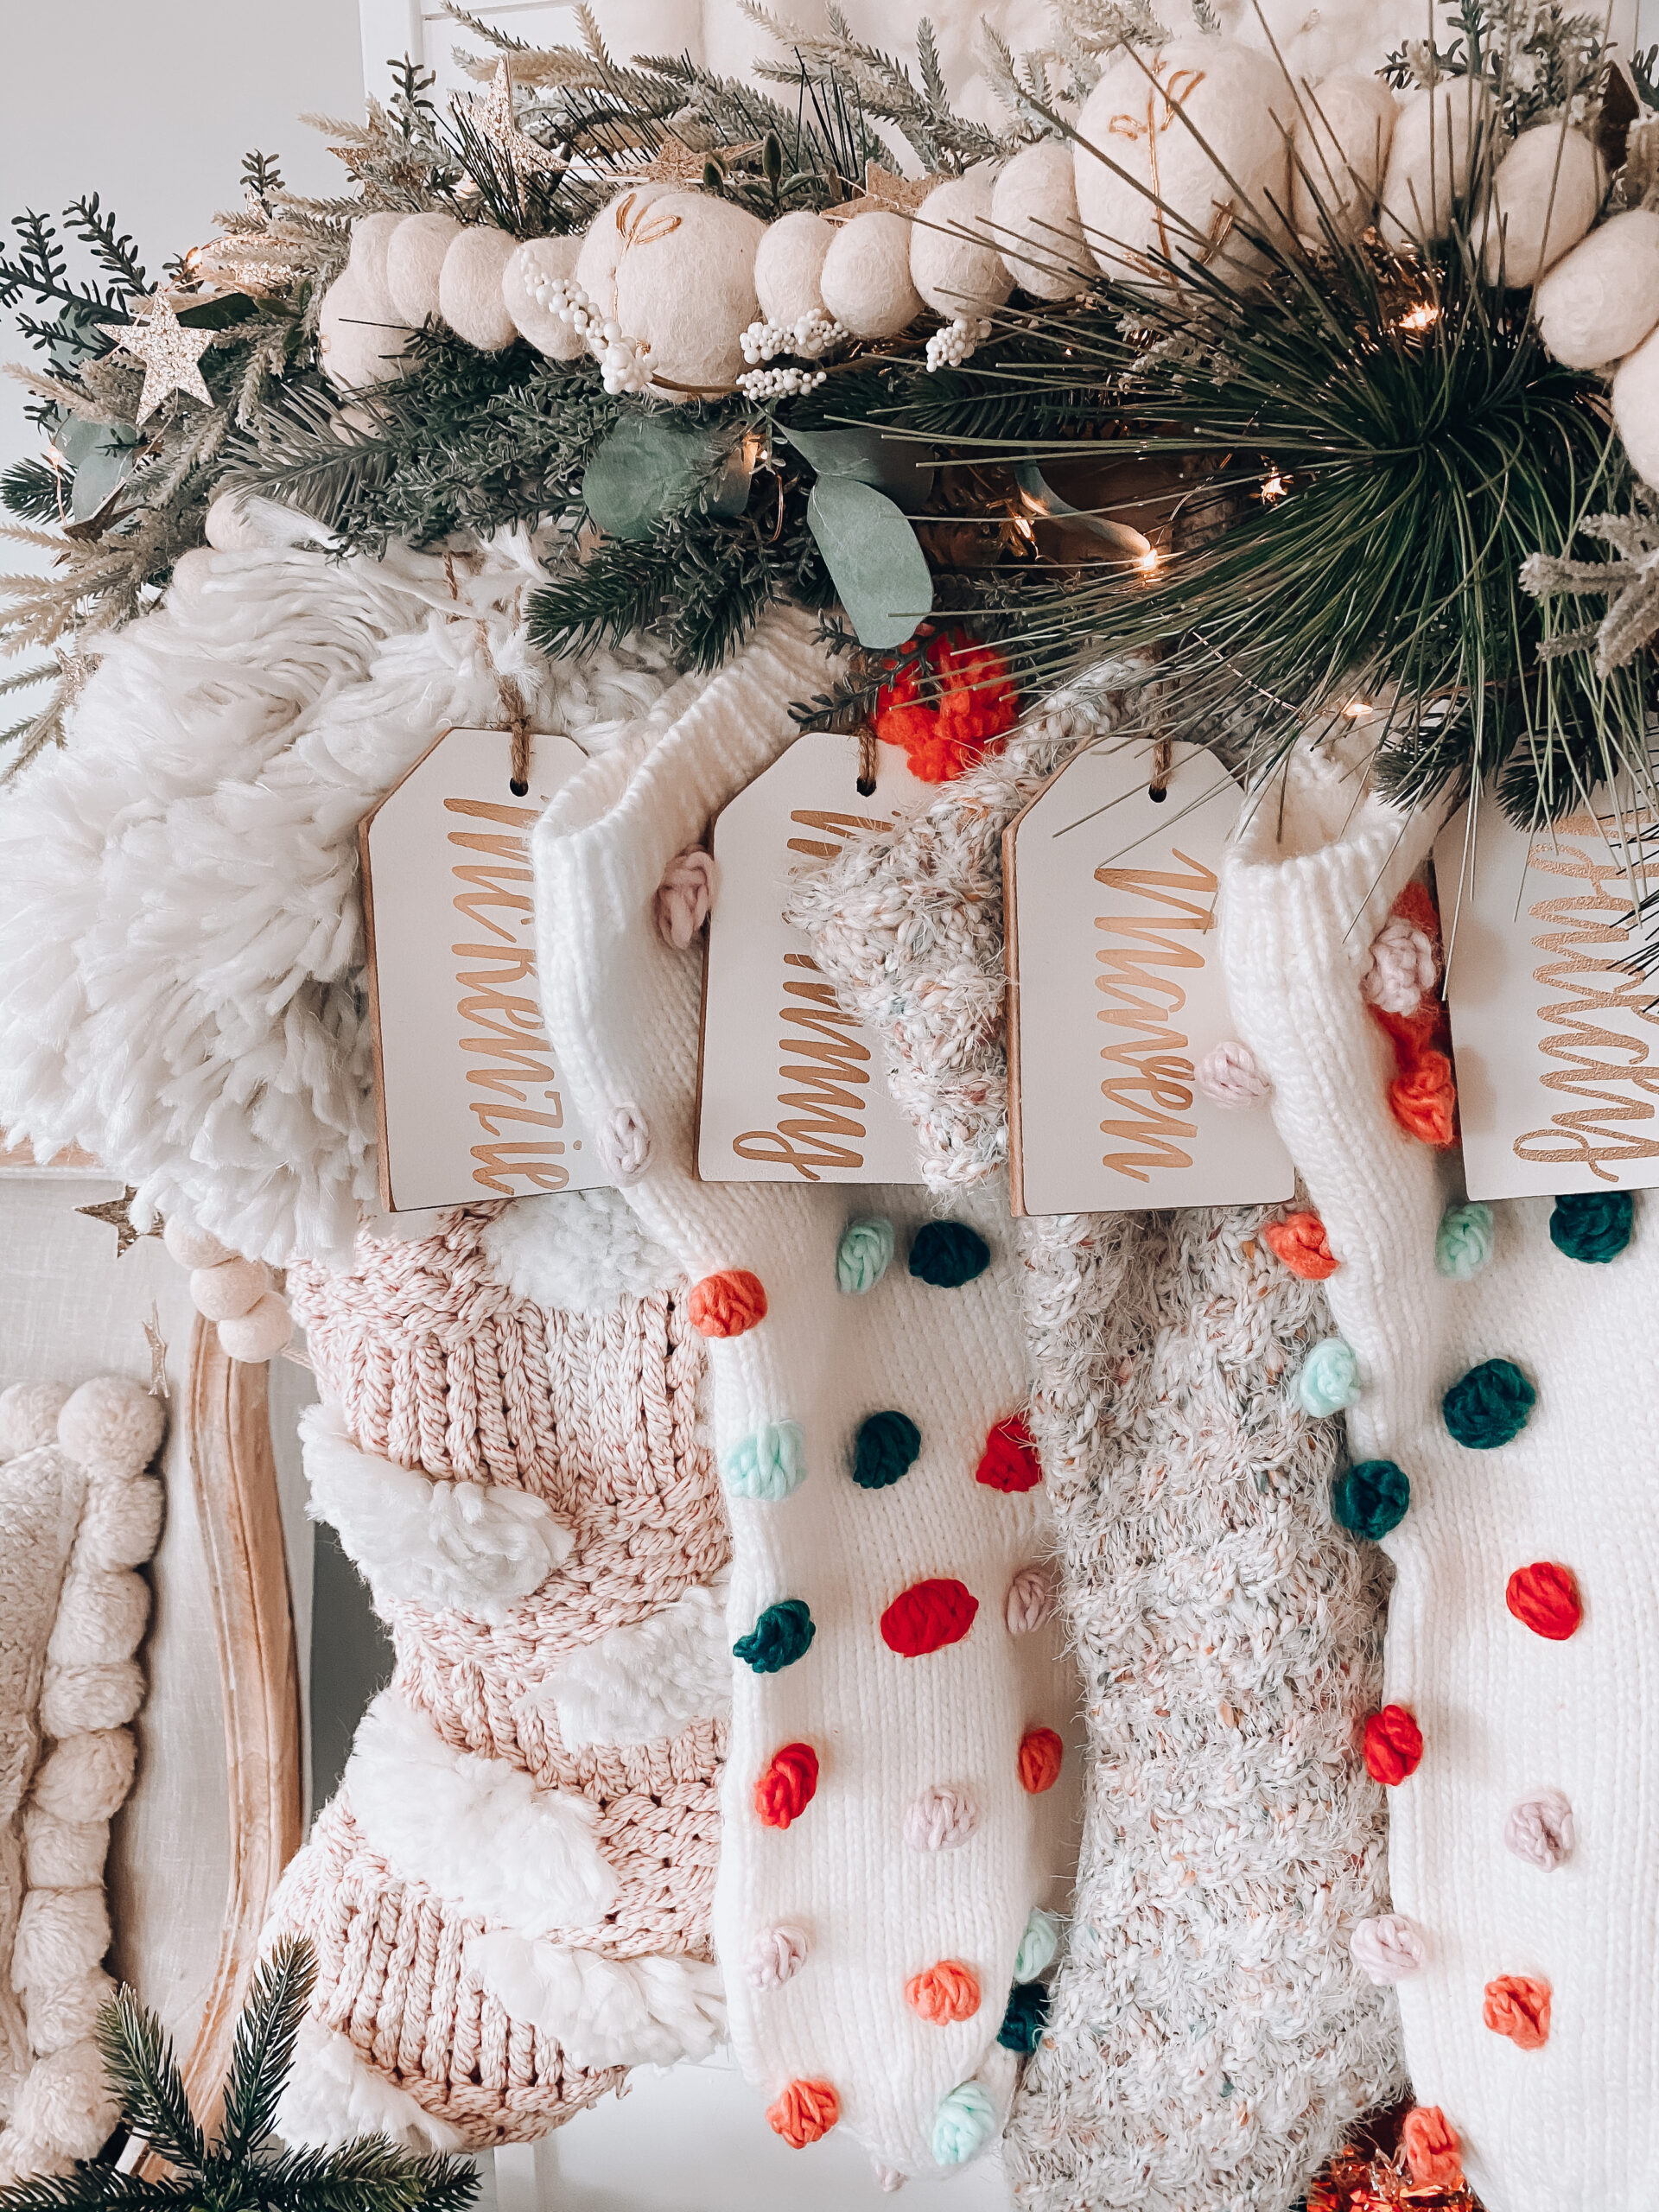 Boho Christmas mantel stockings for the family